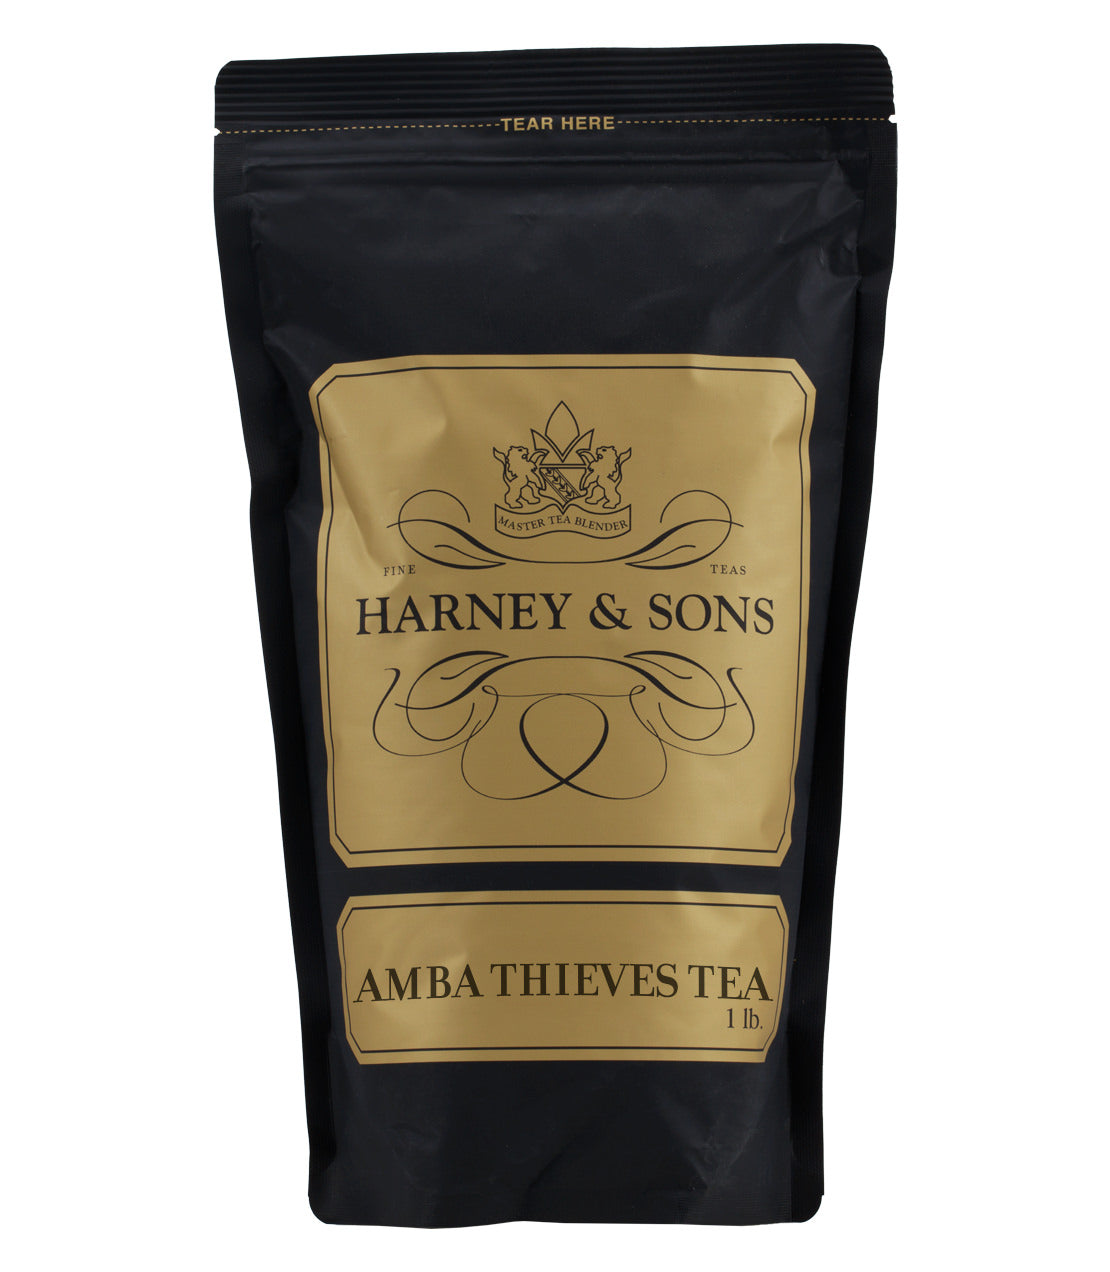 Amba Thieves Tea - Loose 1 lb. Bag - Harney & Sons Fine Teas